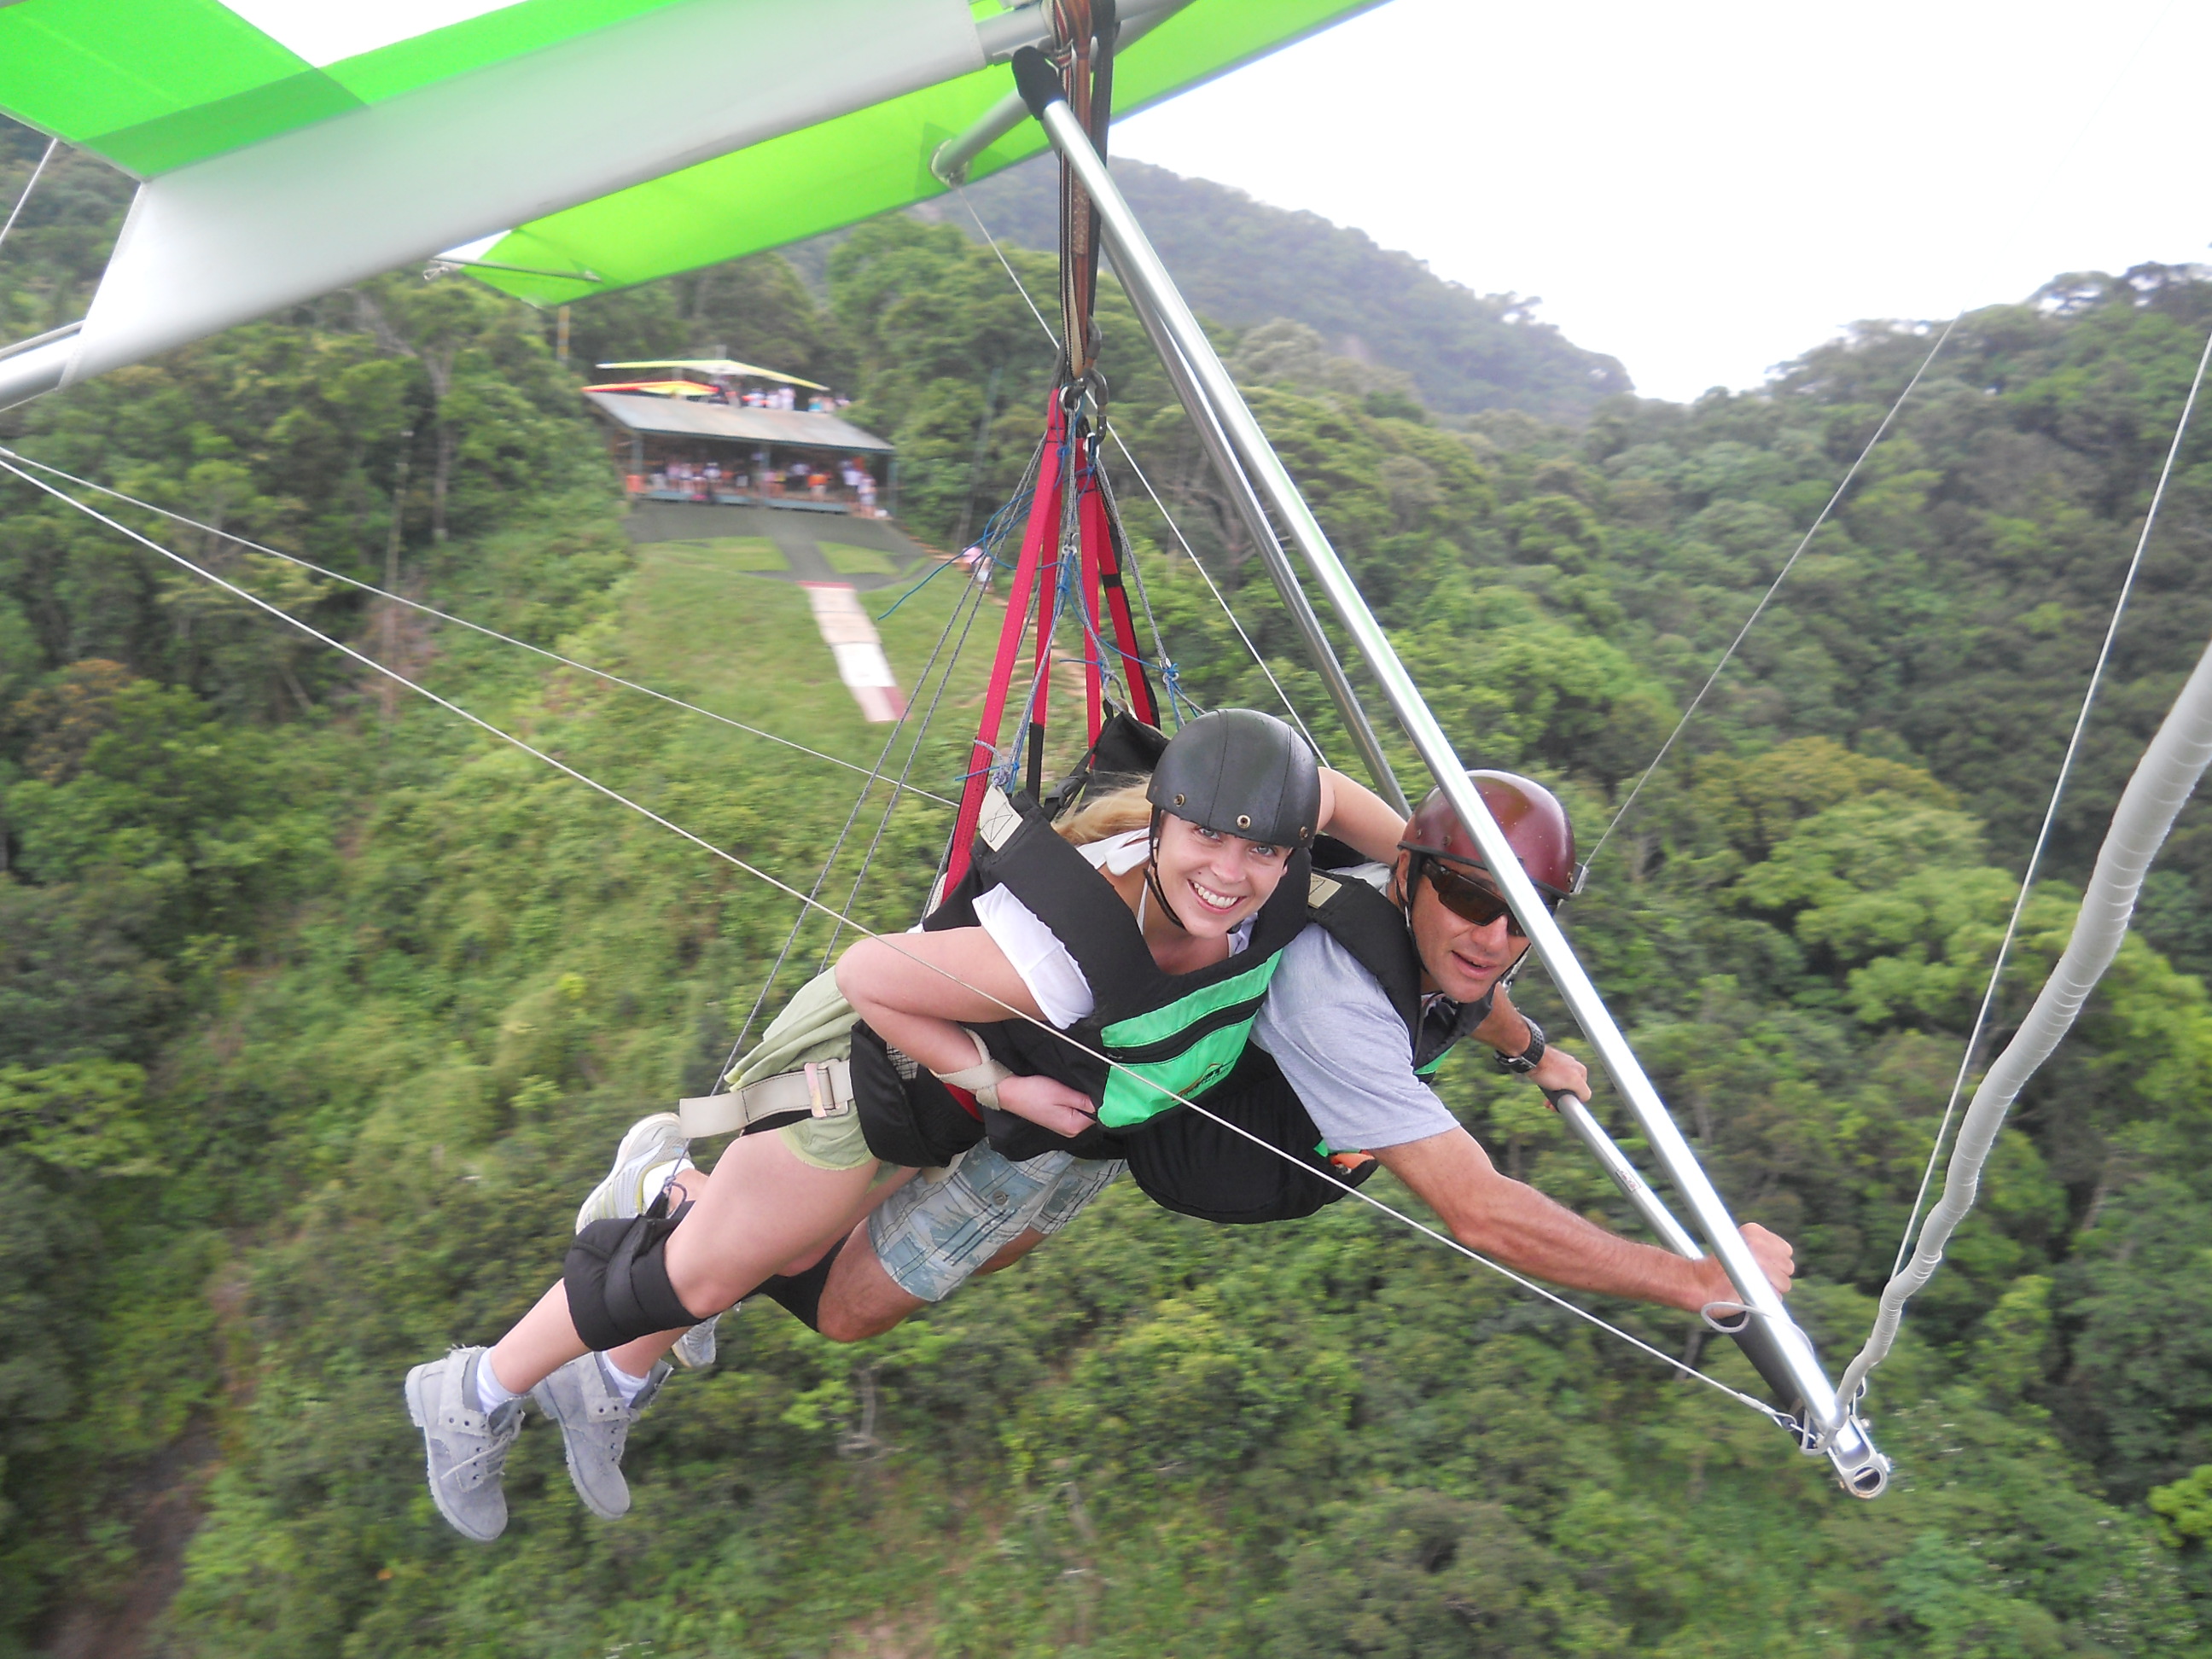 Rio_Hang_Gliding_flying_at_take_off.jpg